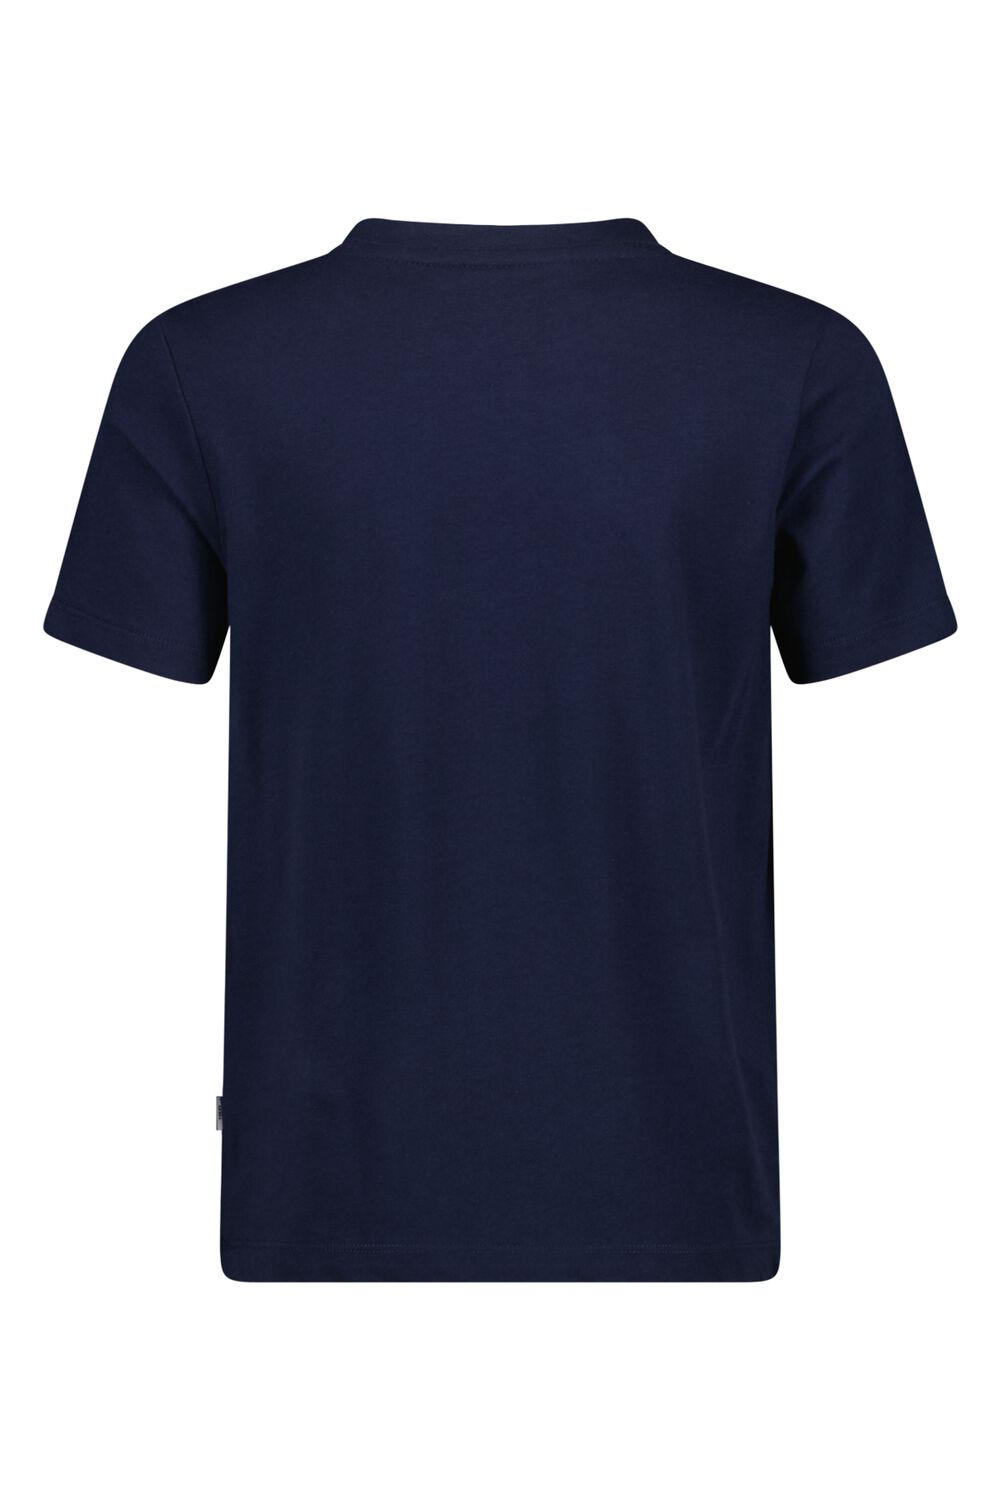 America Today Jongens T-shirt Emery Jr Blauw